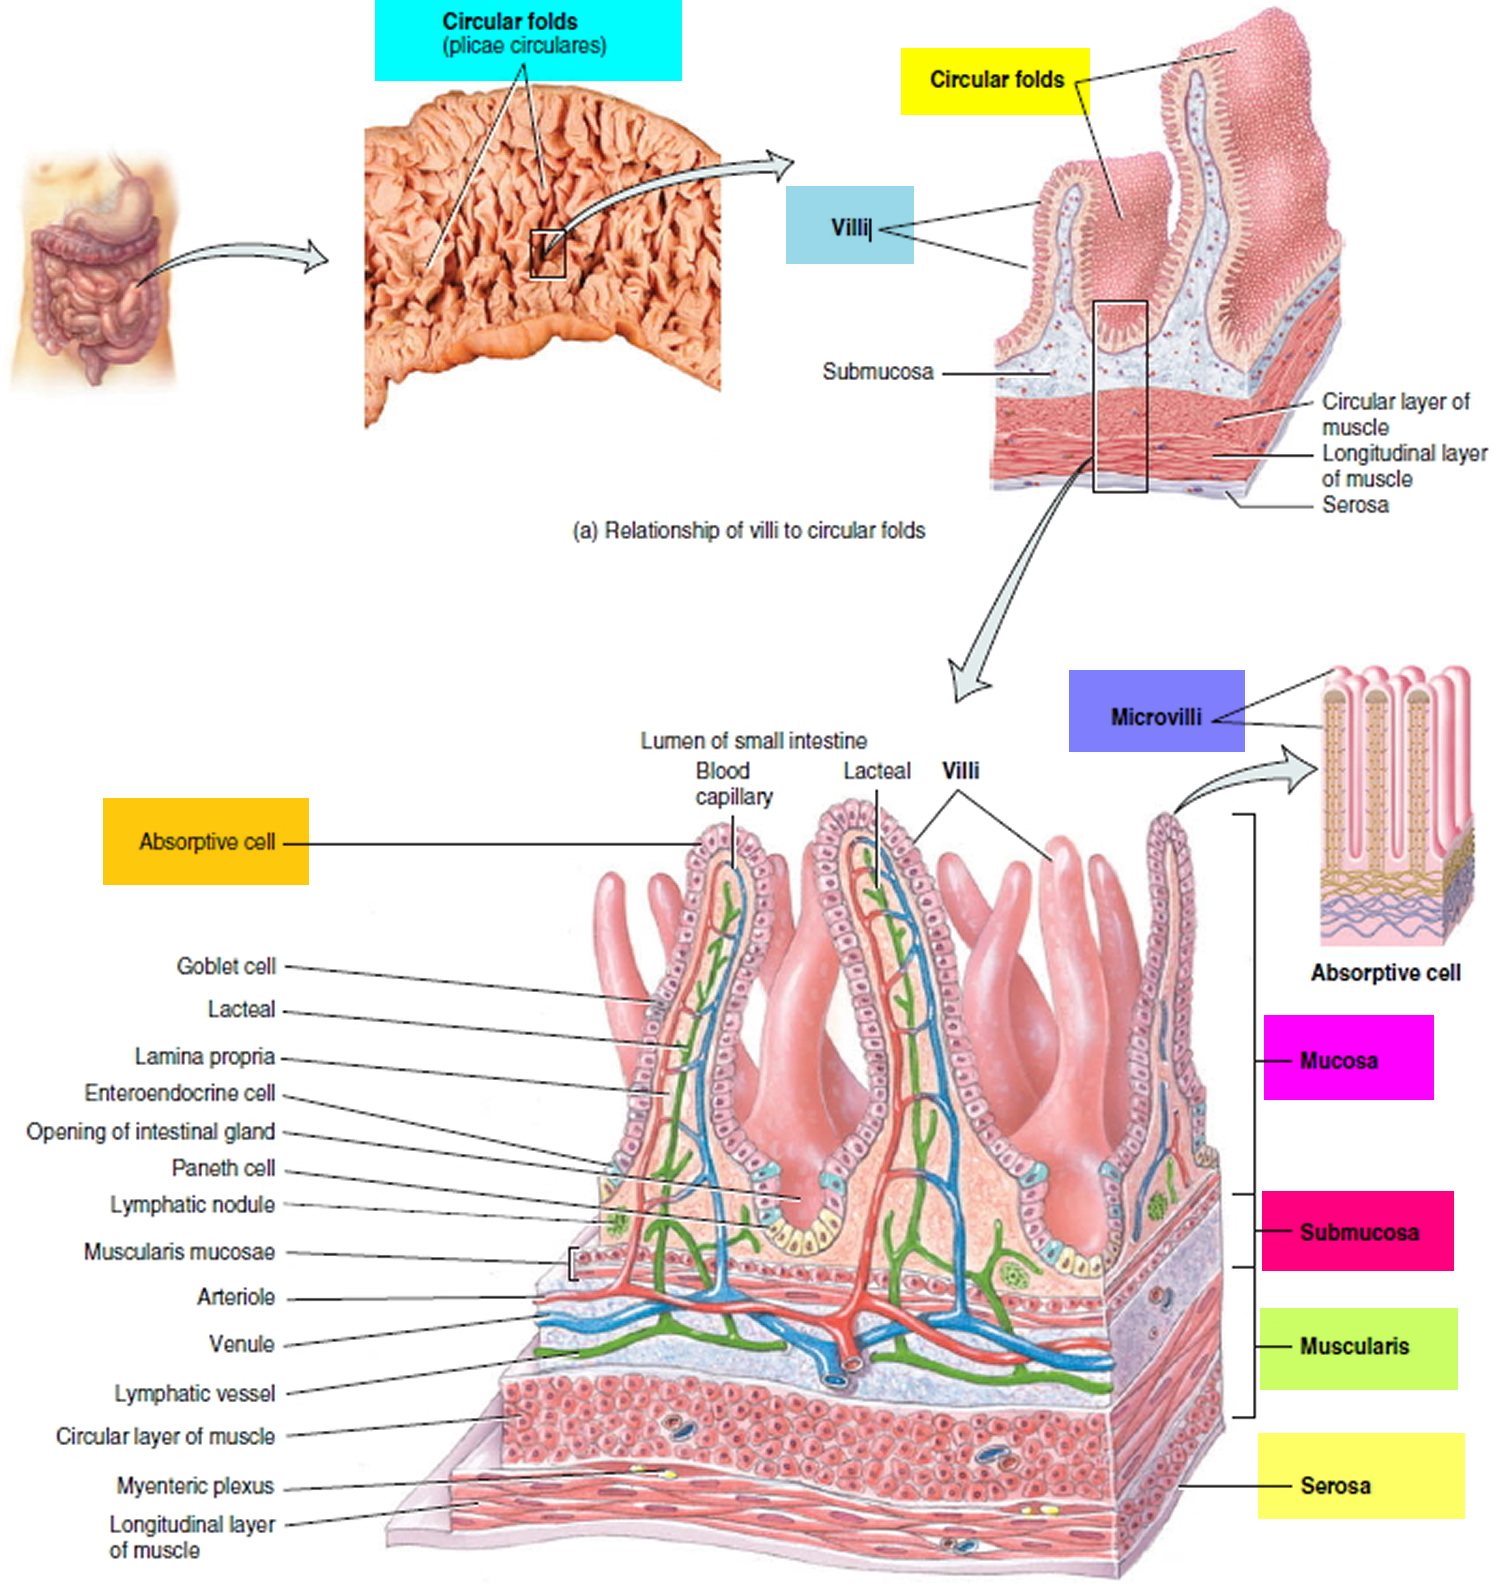 lumen of small intestine function